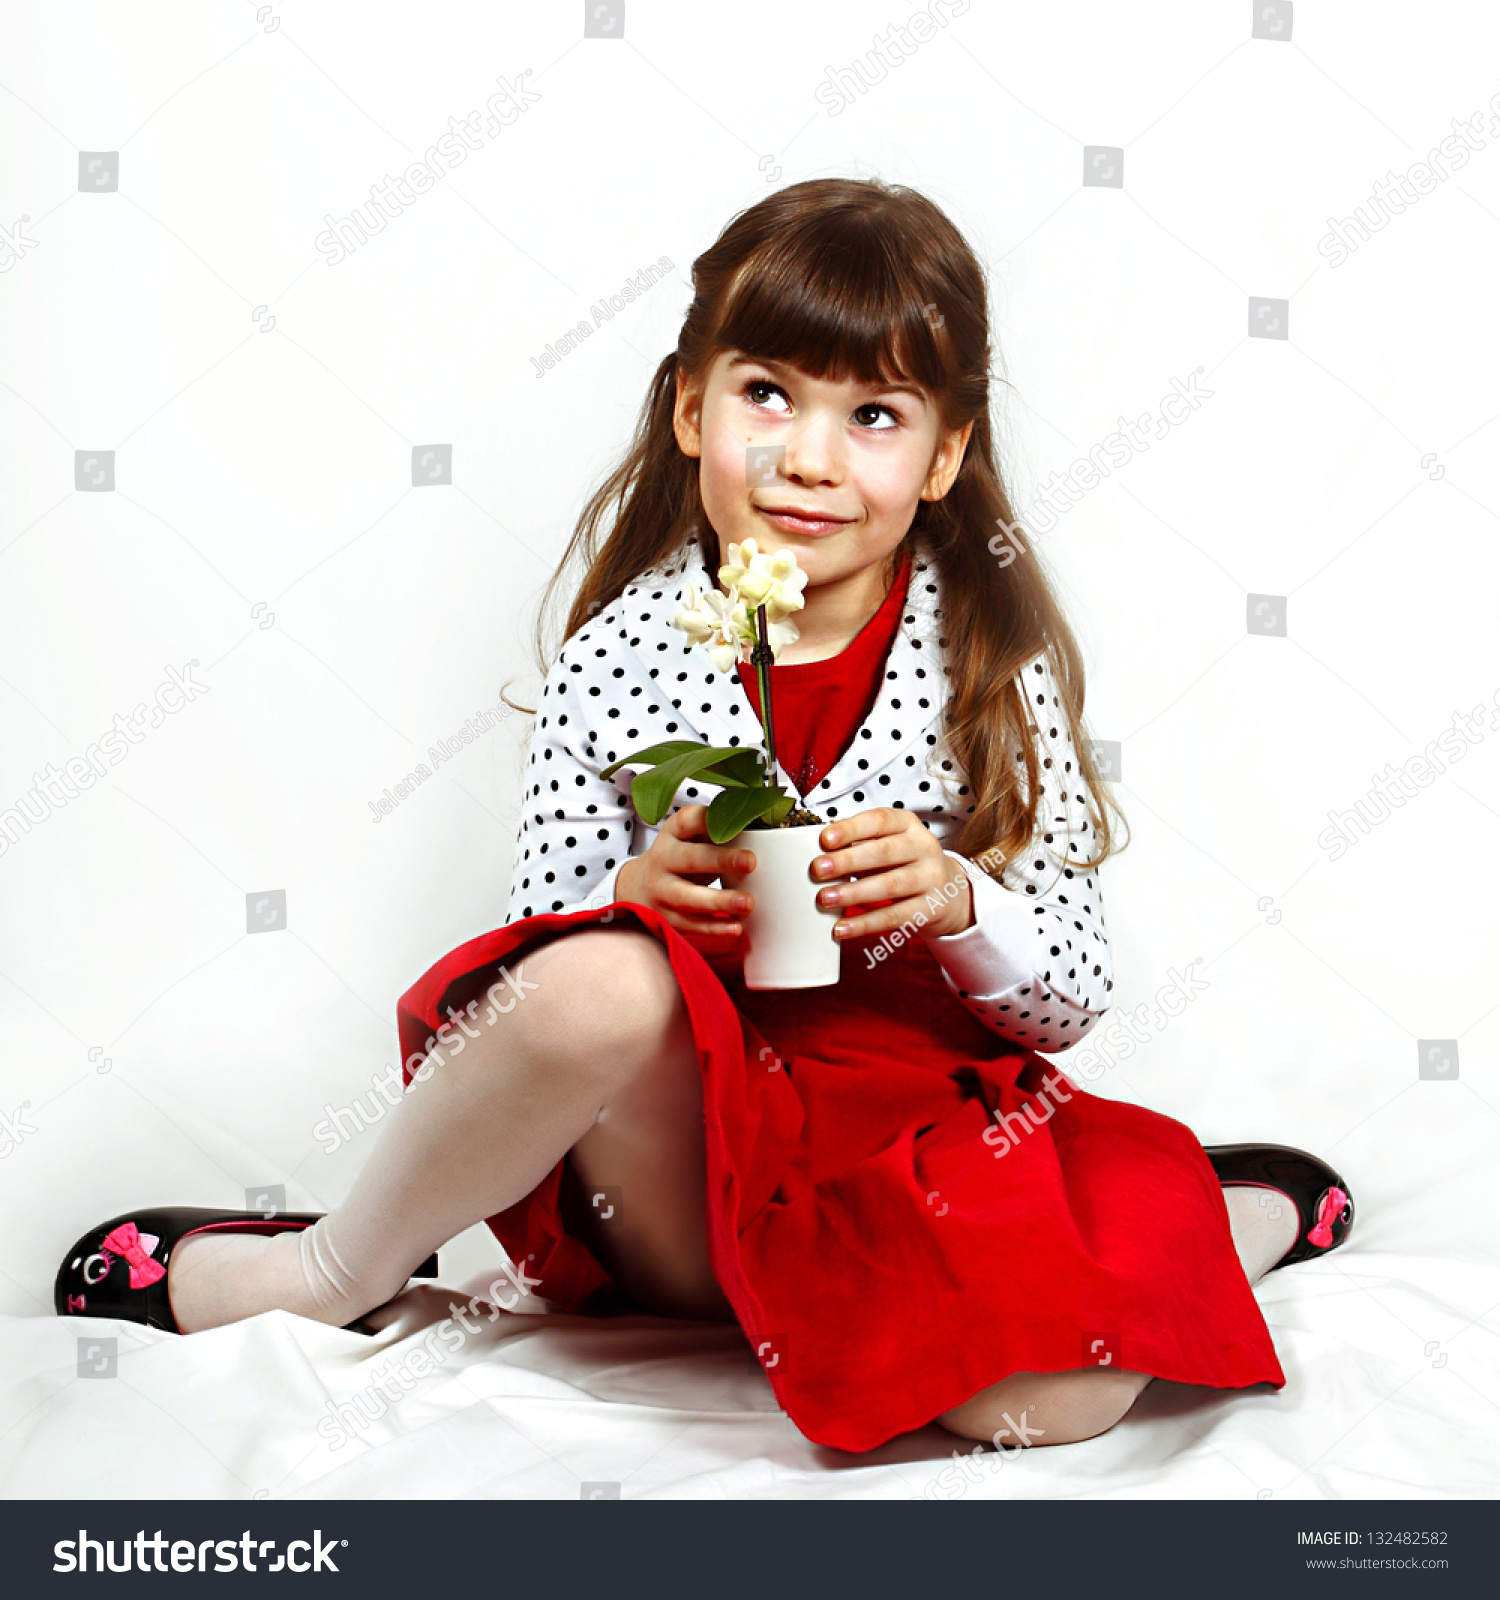 cute little red dress